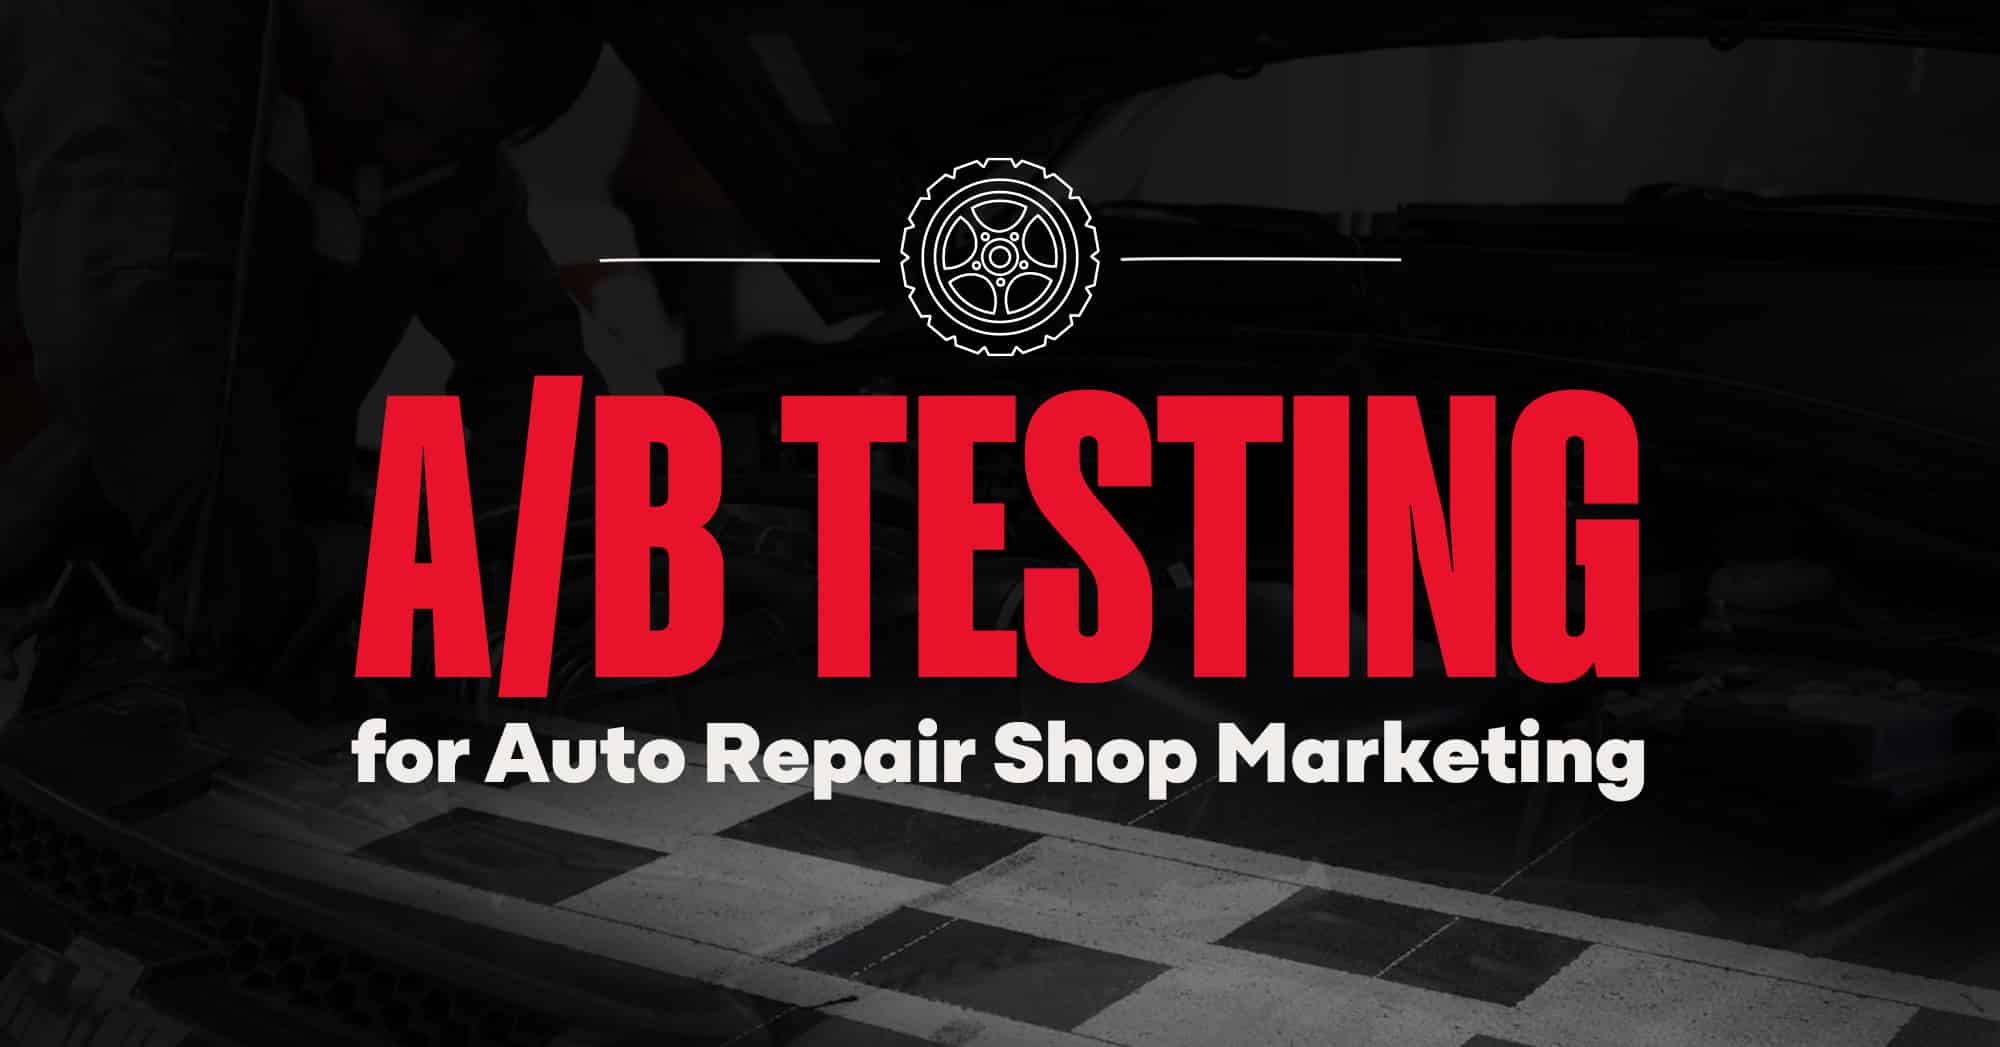 A/B testing for auto repair shop marketing